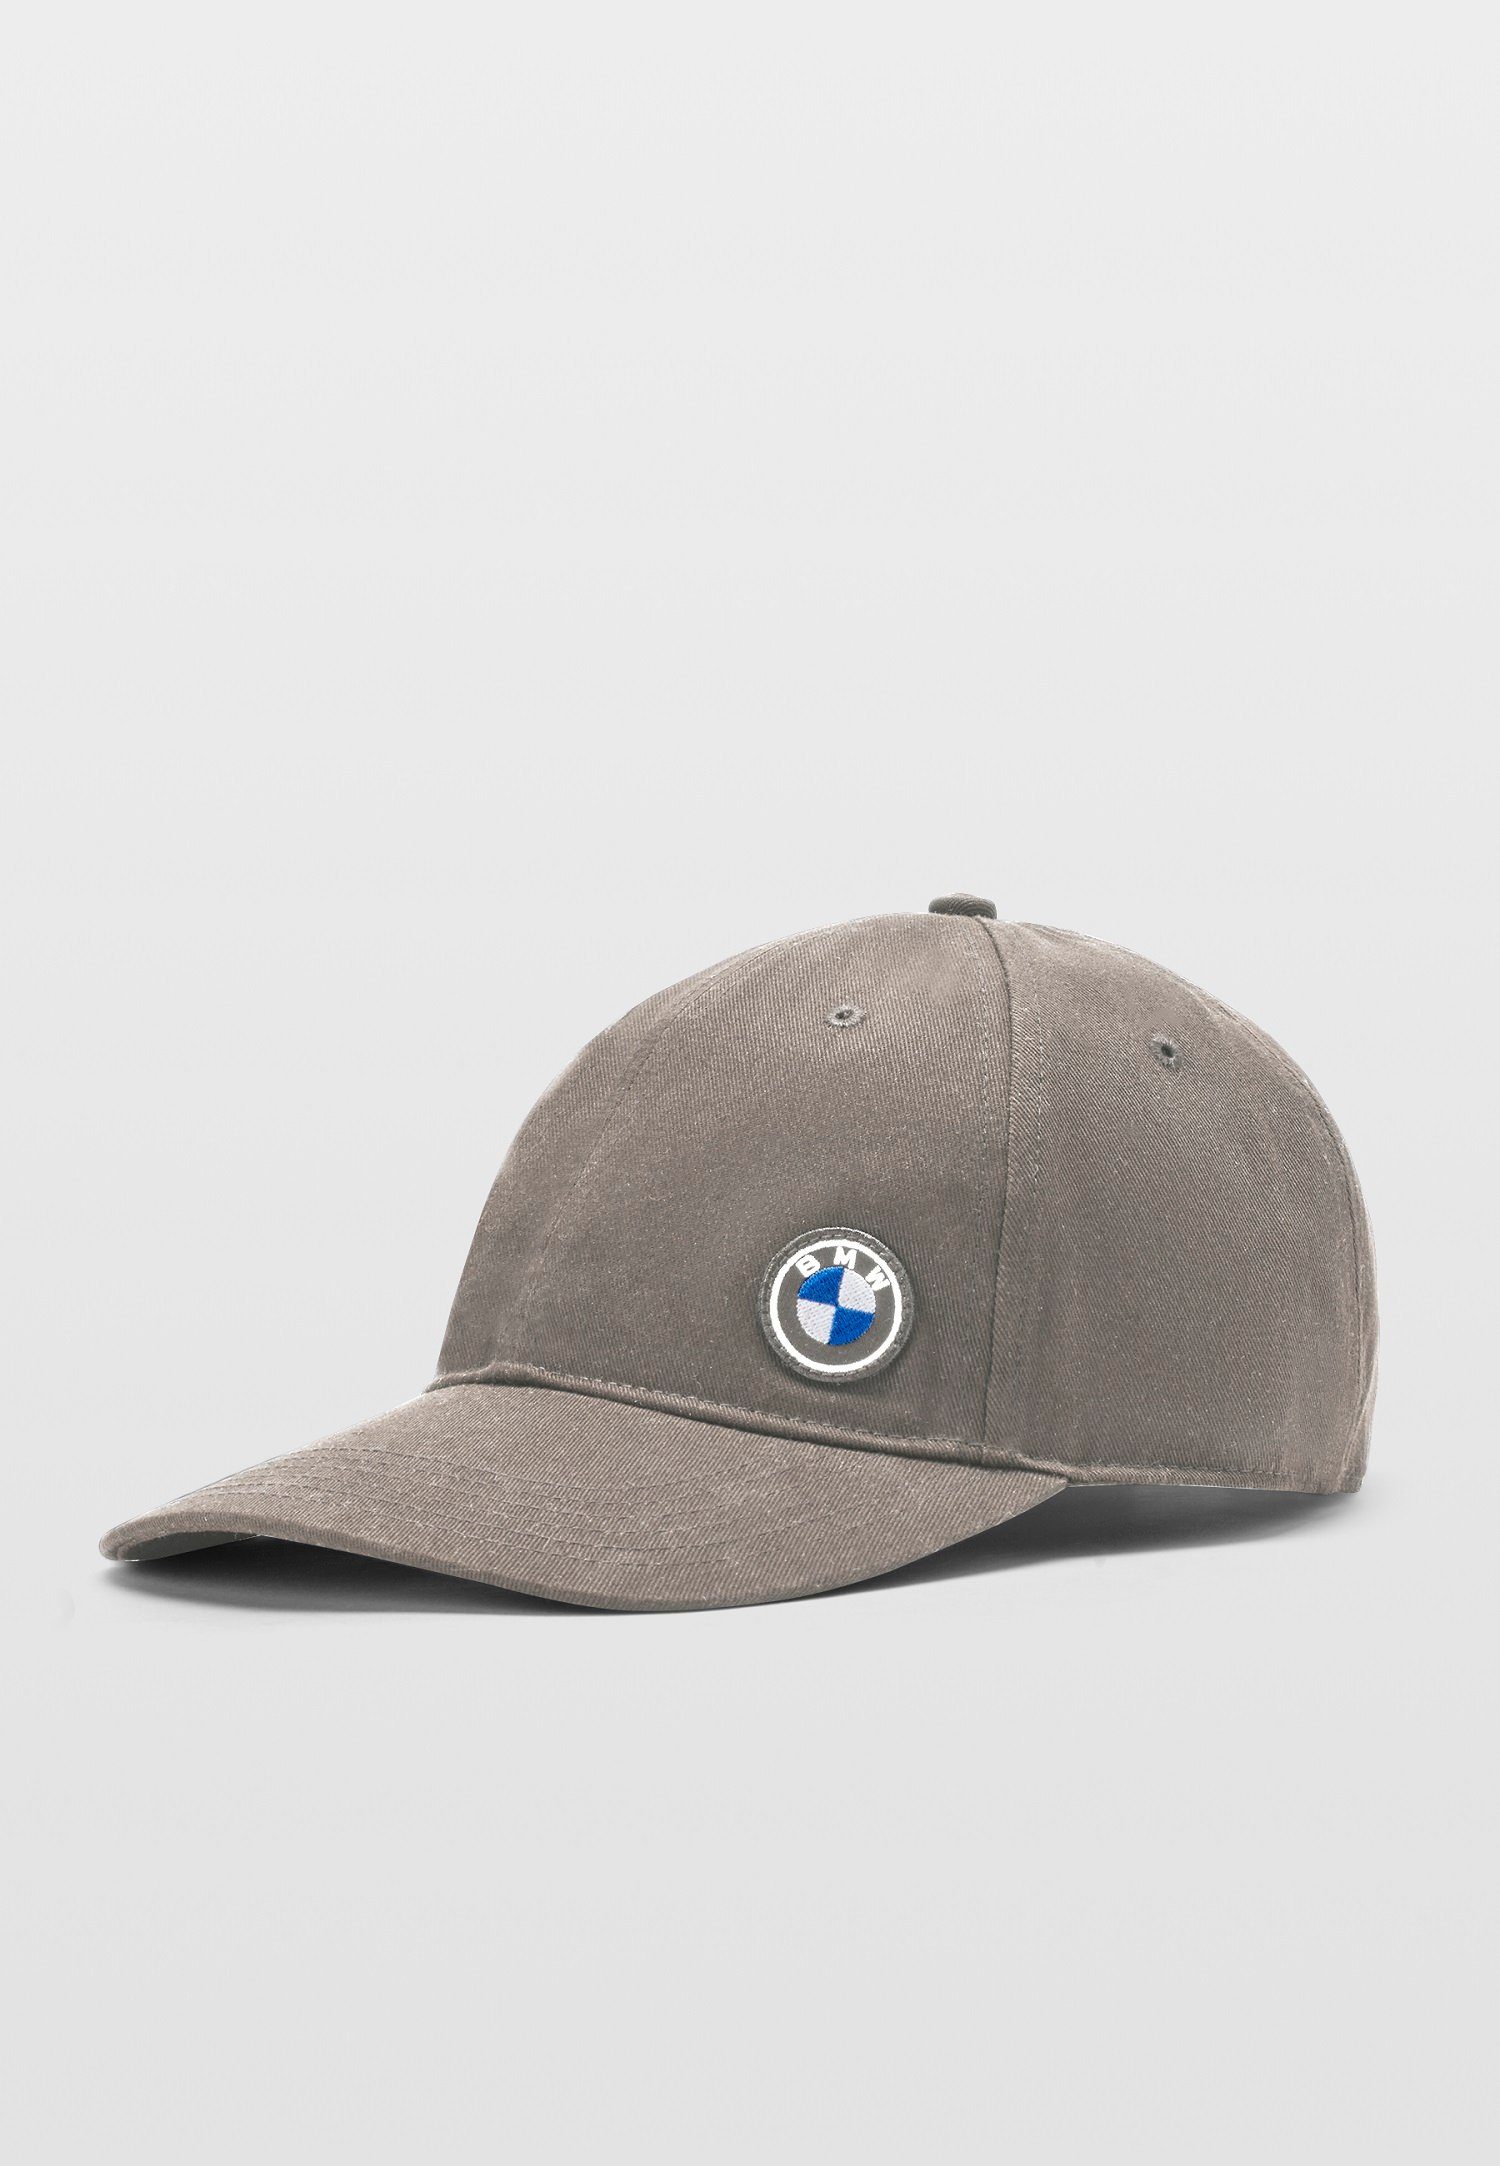 Schirmmütze Basecap (1-St) Baseball Cap Grau Cap Mütze BMW Baseballkappe Kappe BMW